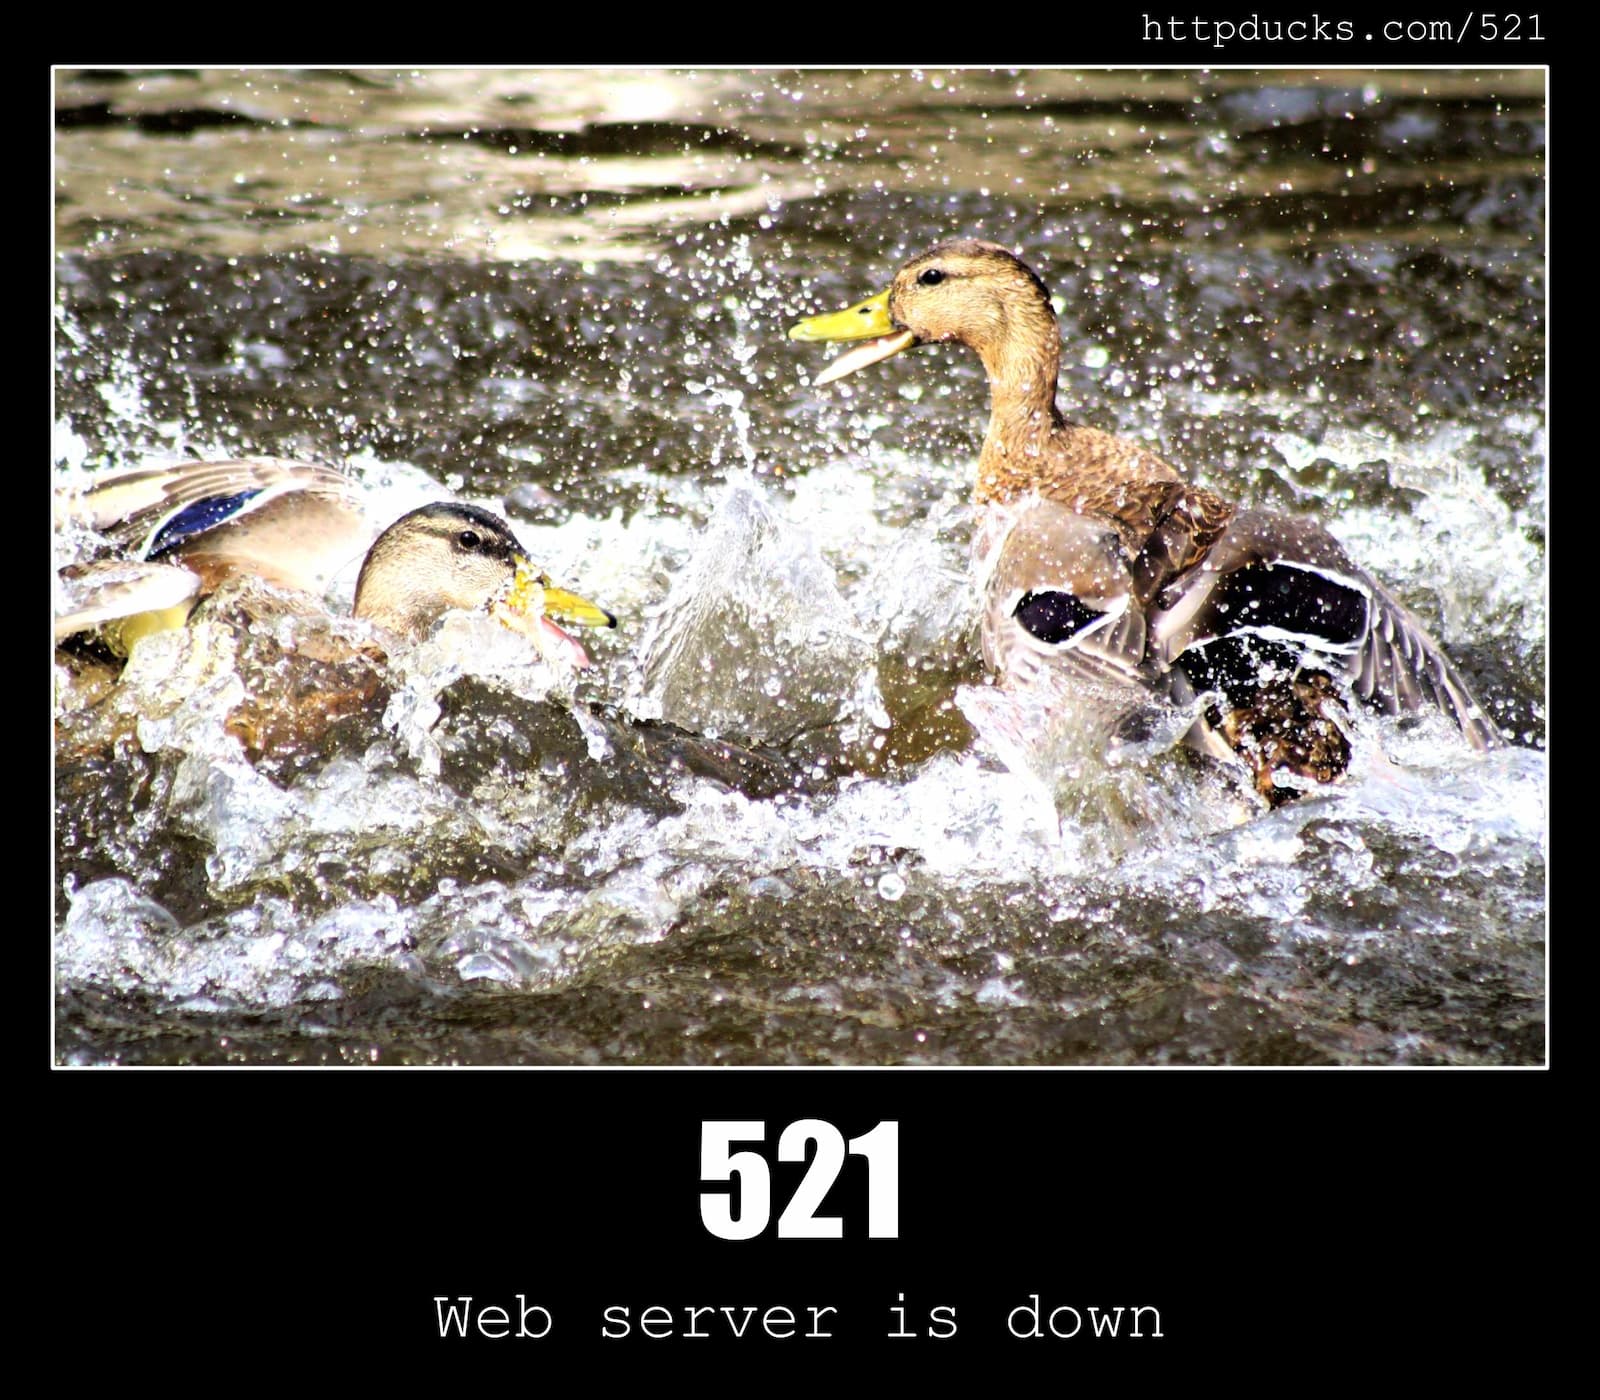 HTTP Status Code 521 Web server is down & Ducks